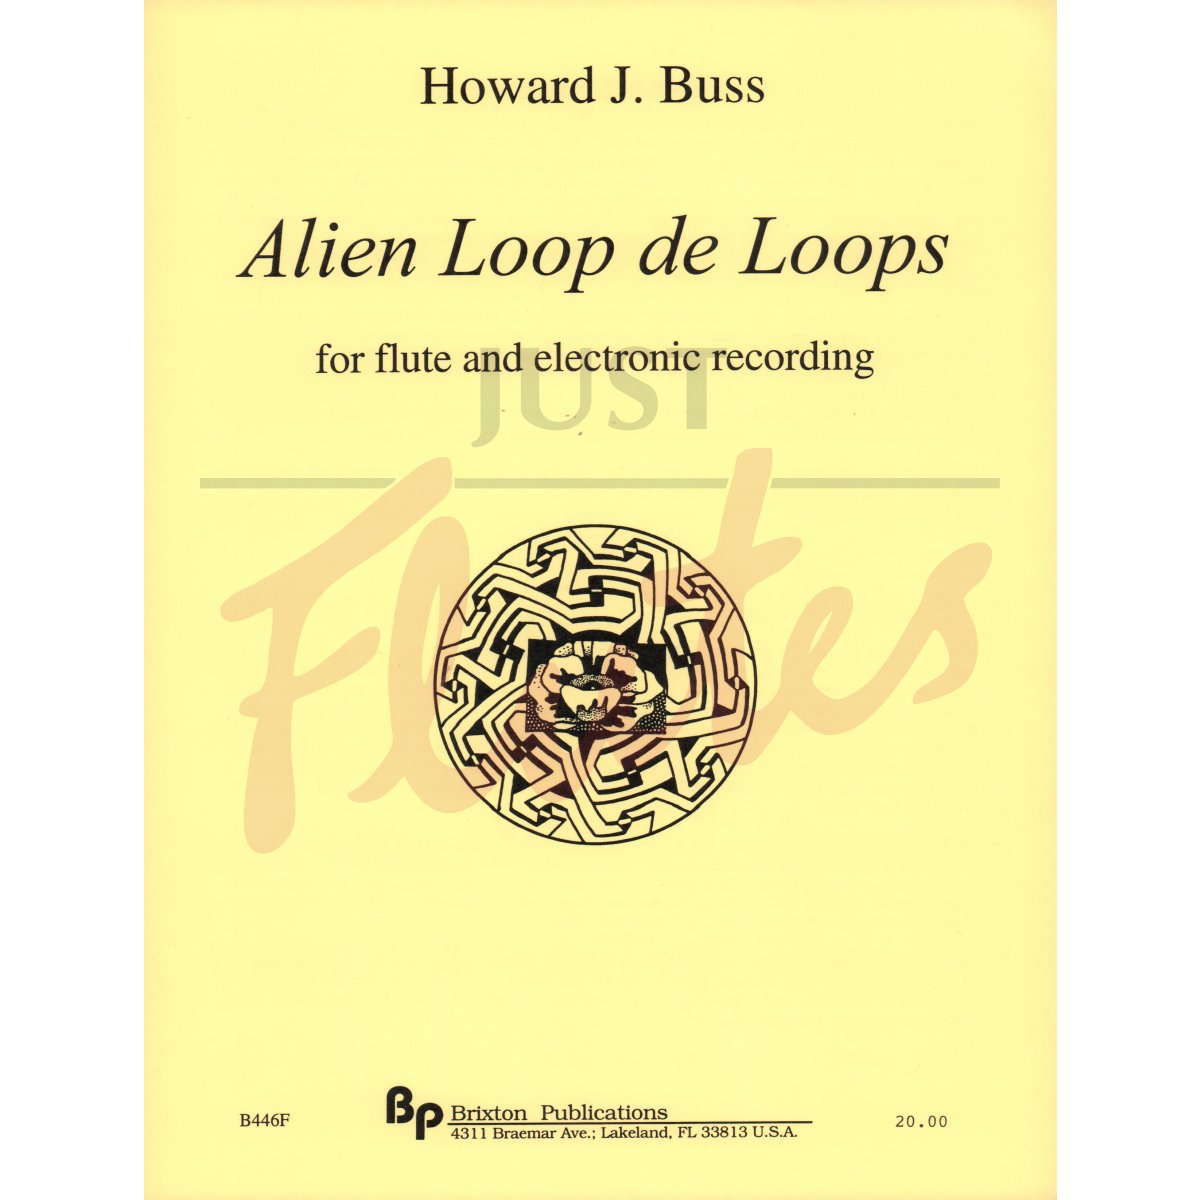 Alien Loop de Loops for flute and electronics